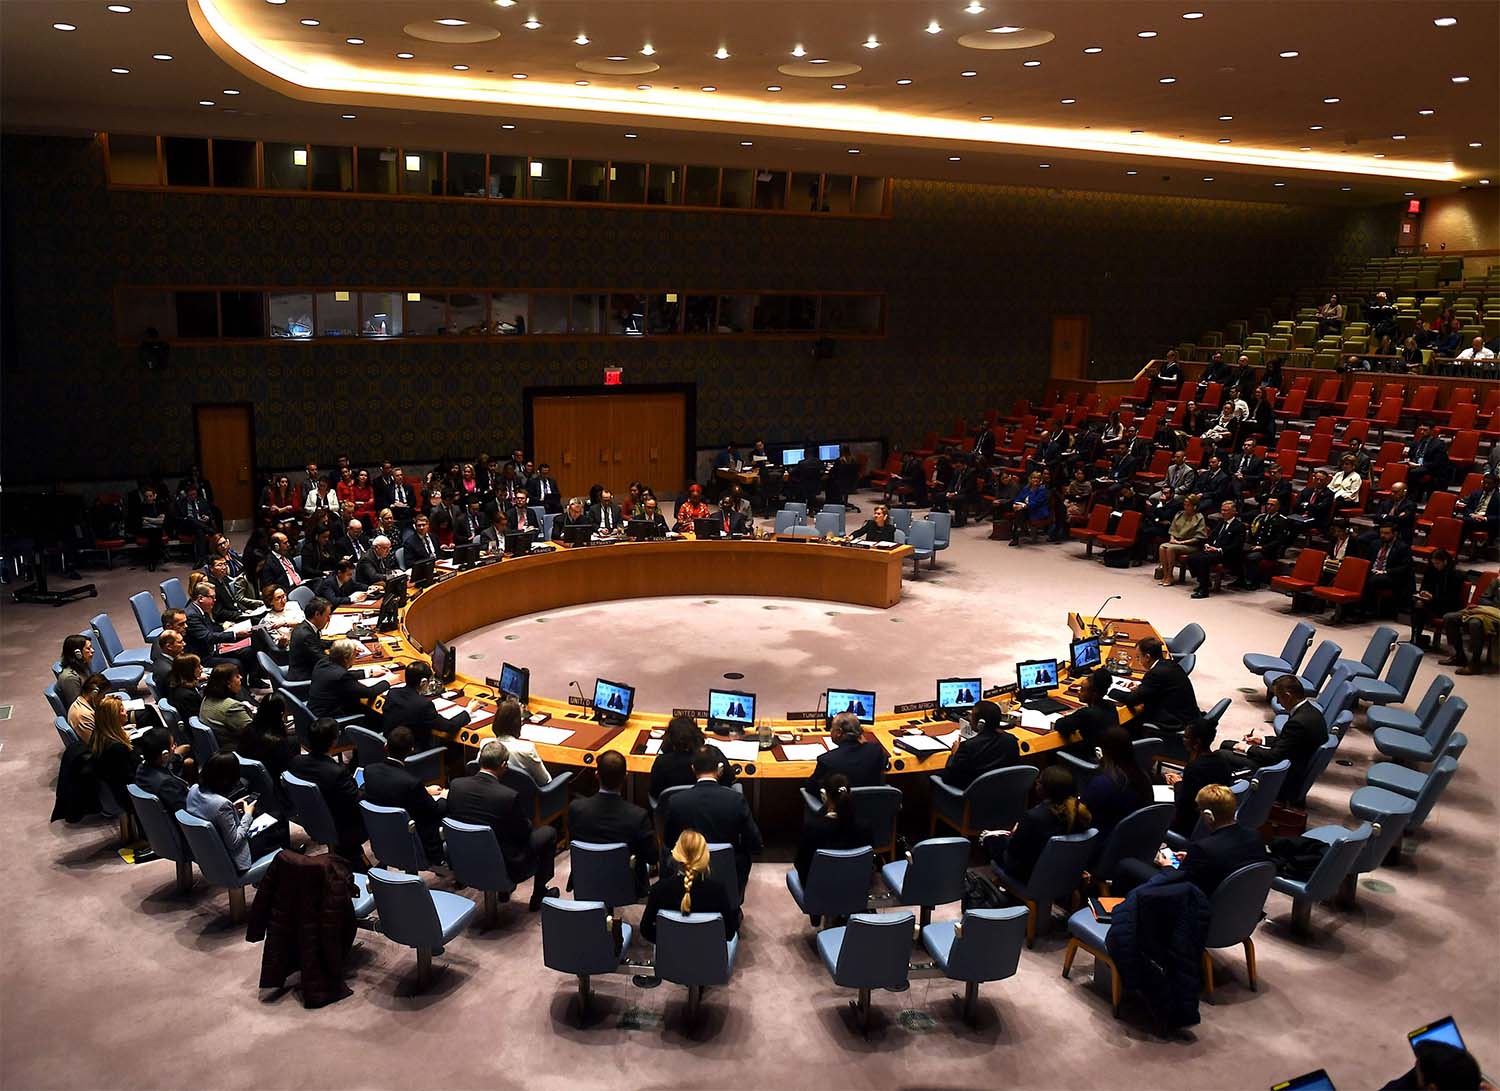 UN Security Council meeting